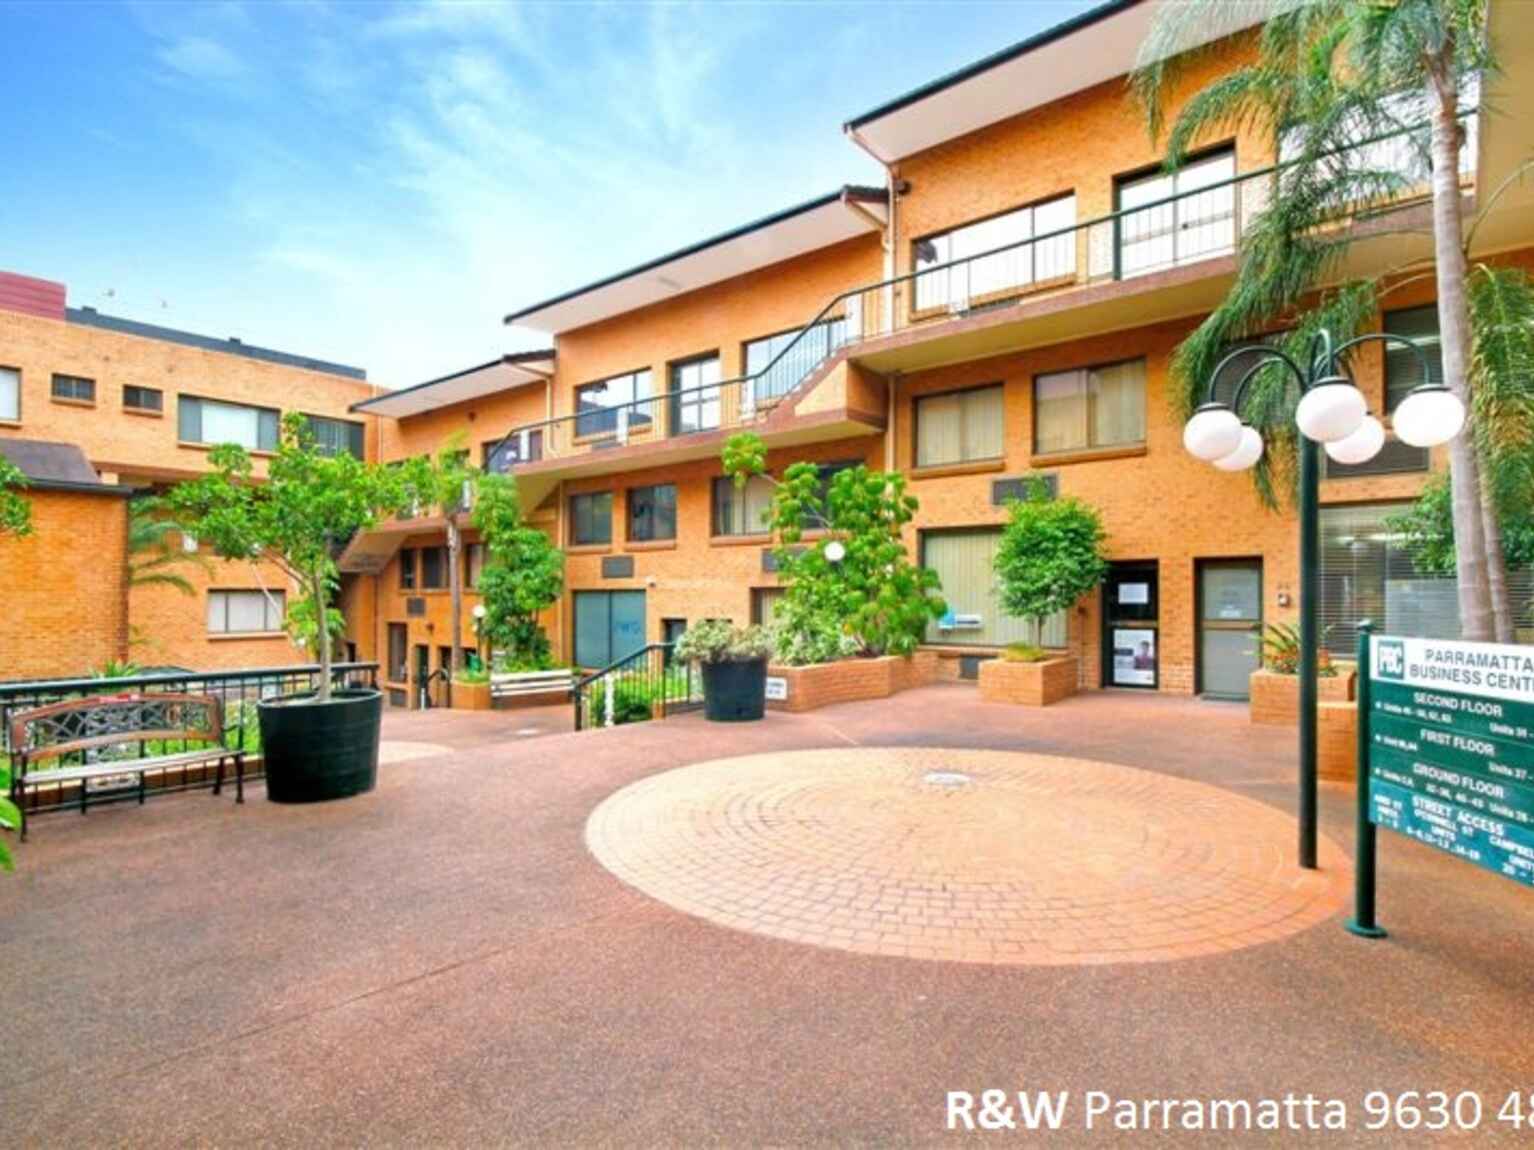  Parramatta